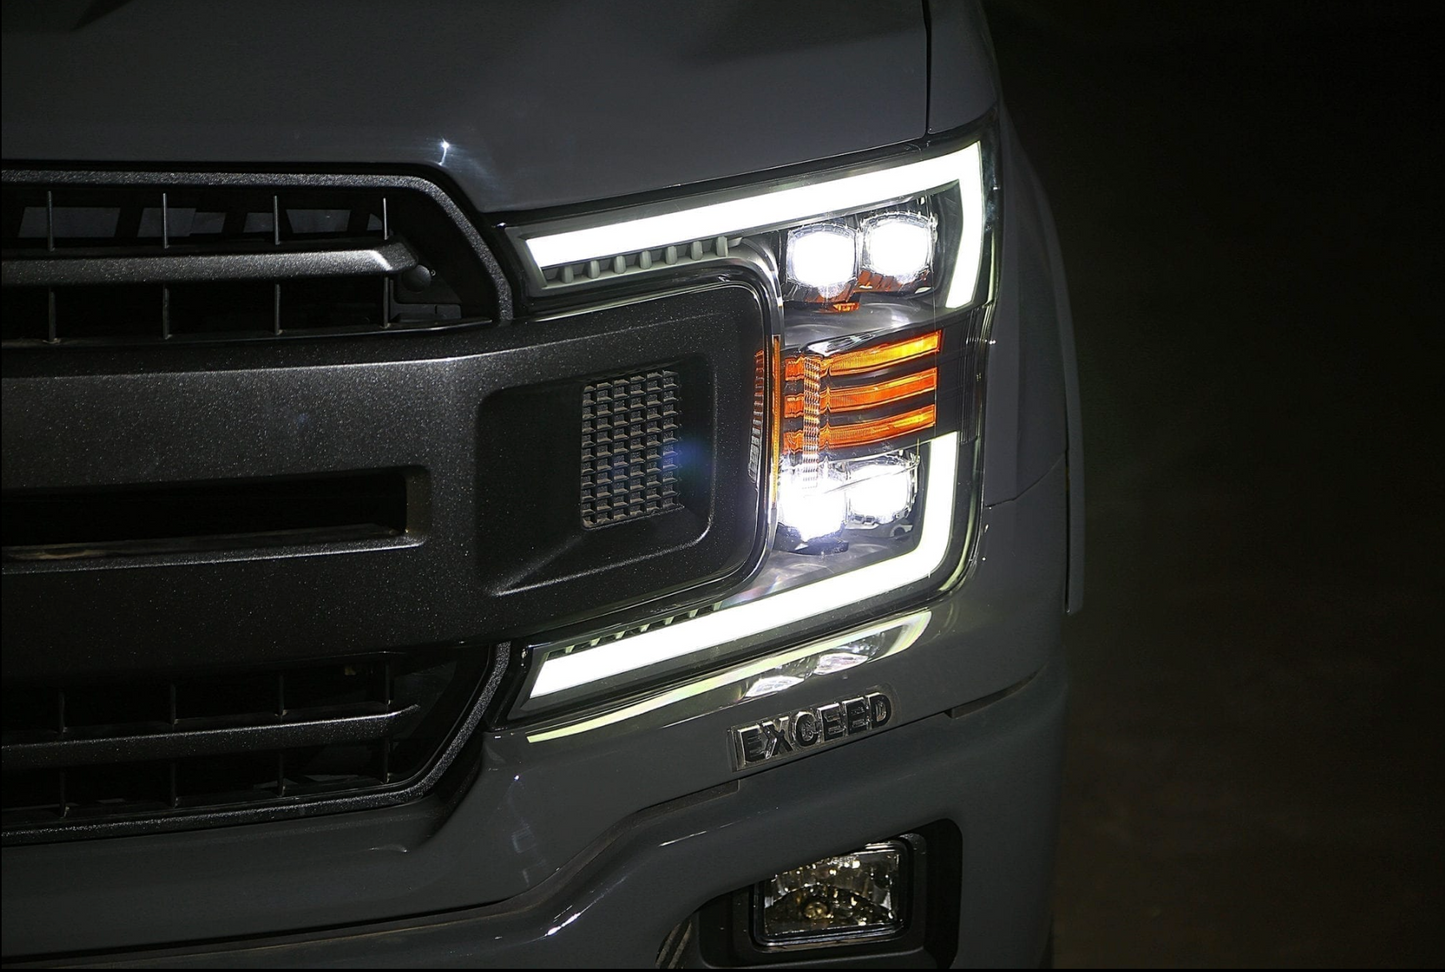 AlphaRex 18-20 Ford F150 NOVA-Series LED Projector Headlights Black